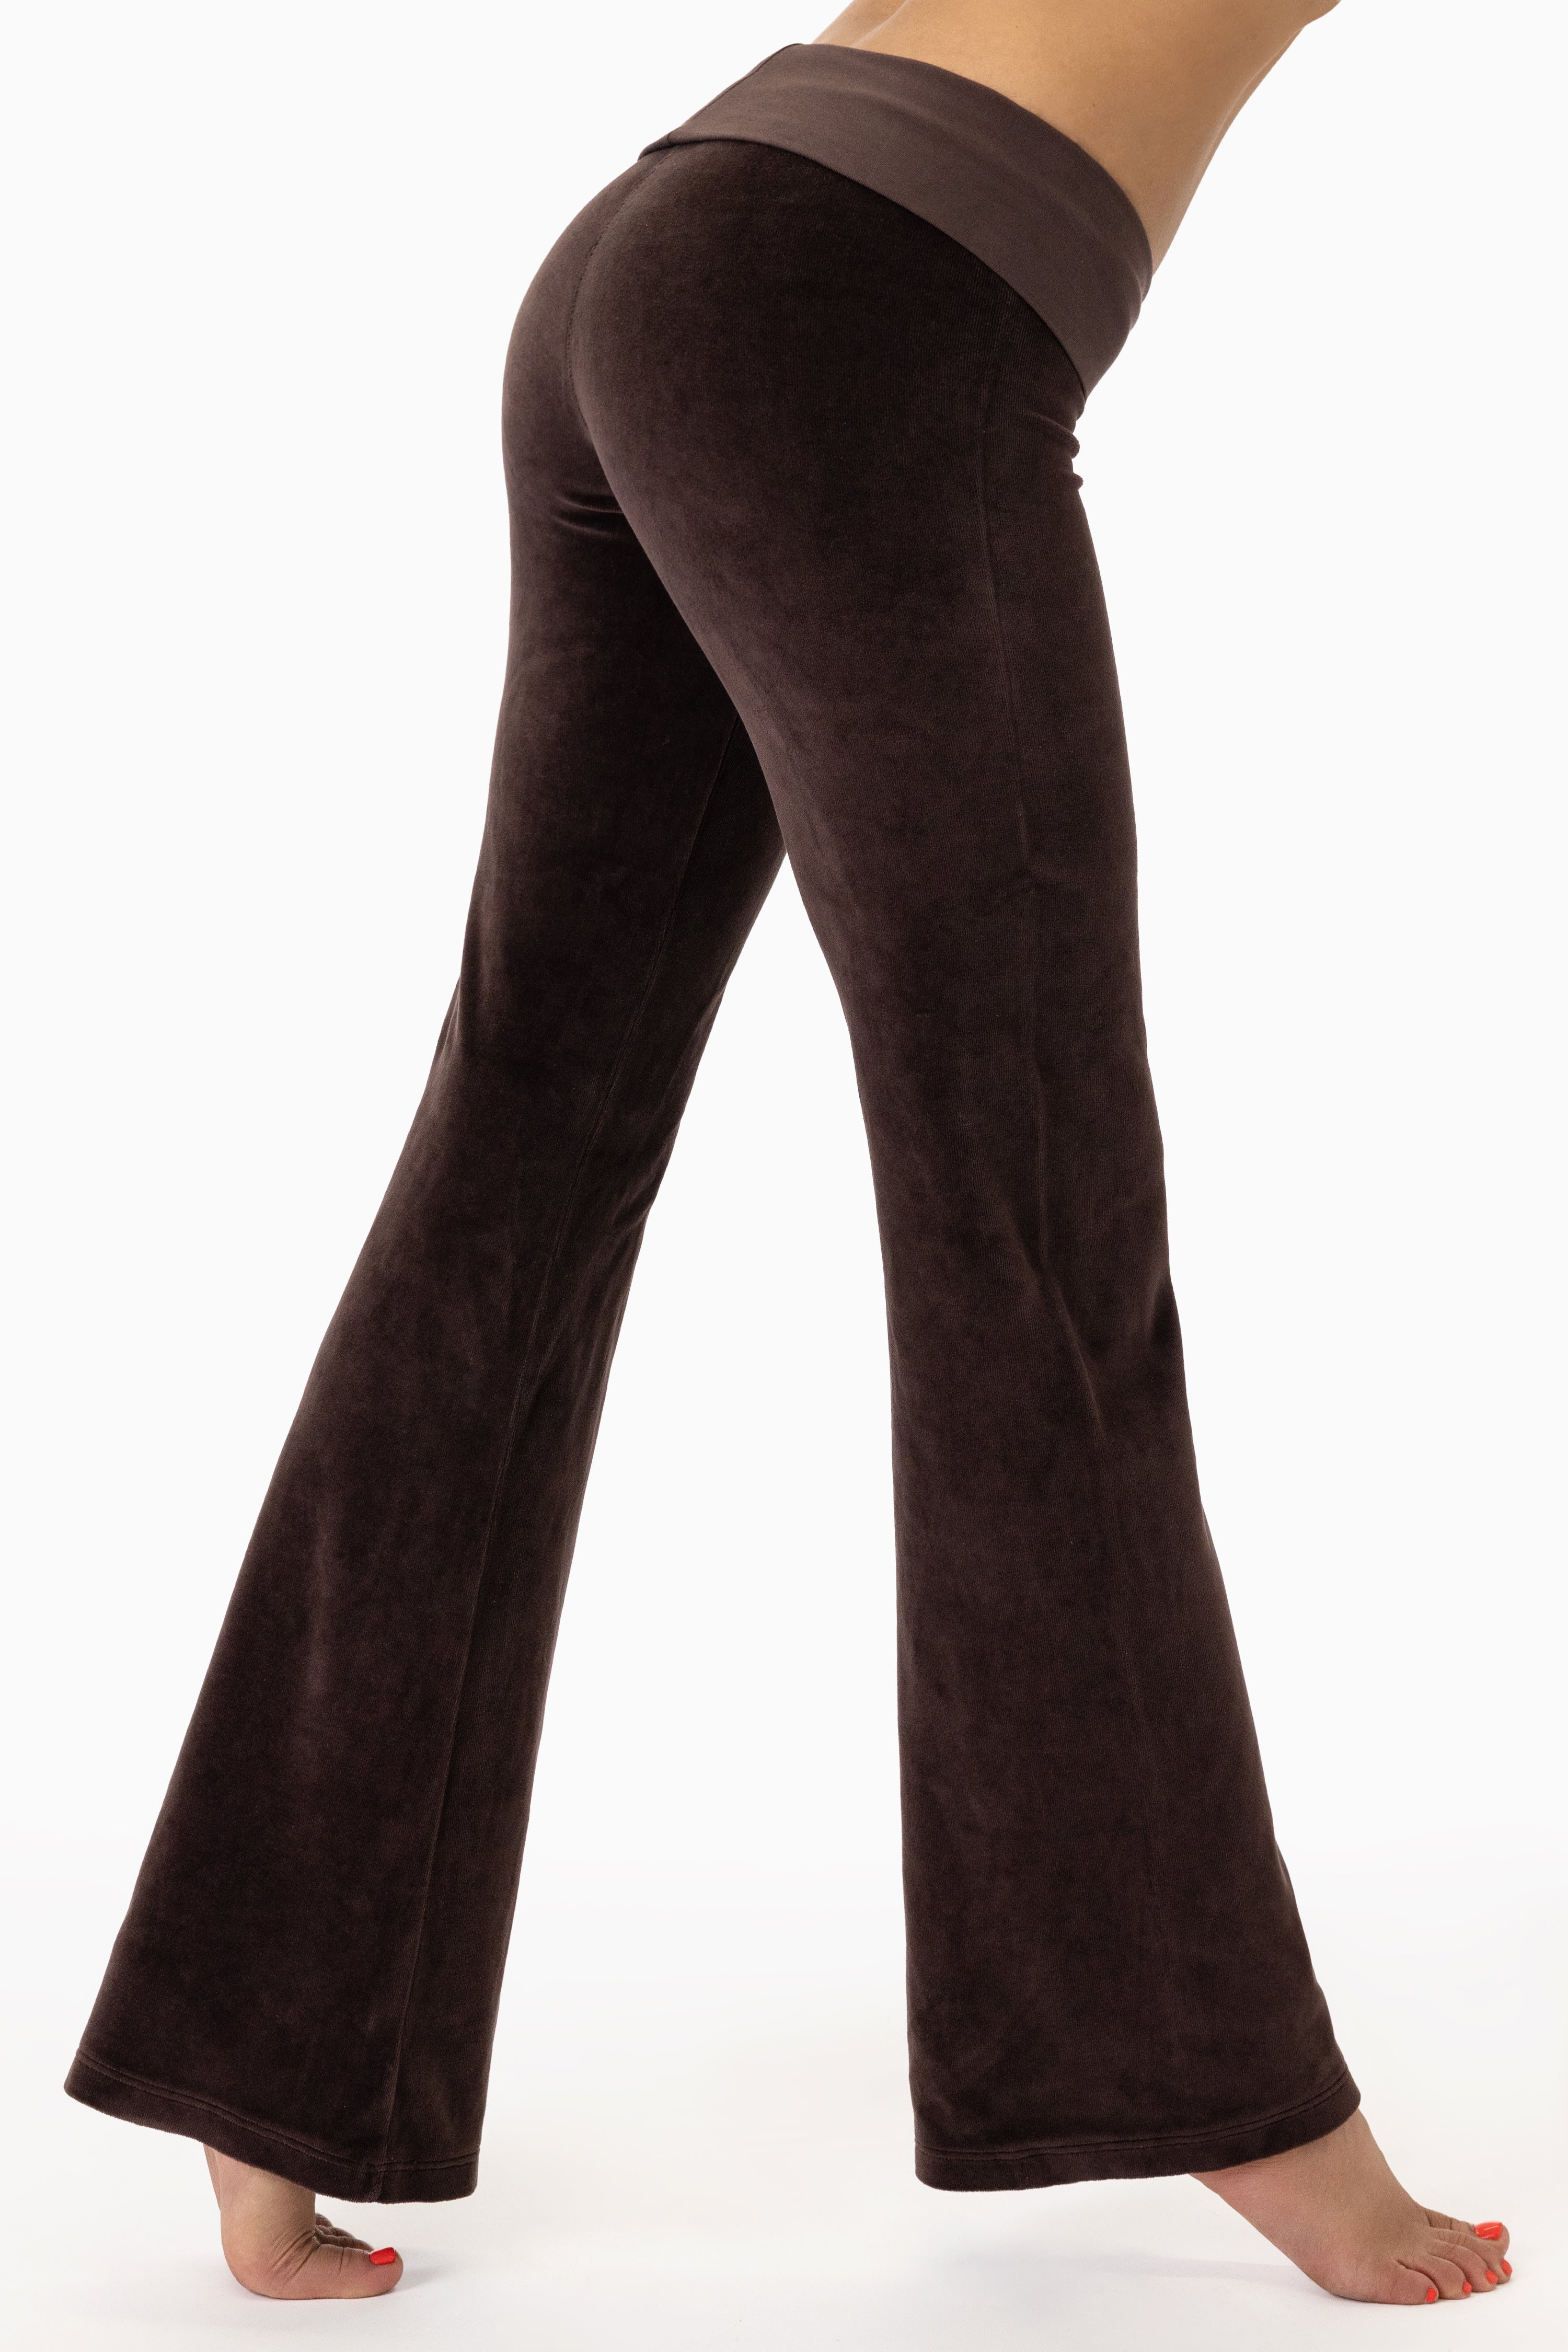 PINK By Victorias Secret Crop Yoga Legging Bundle 3 Pairs XS